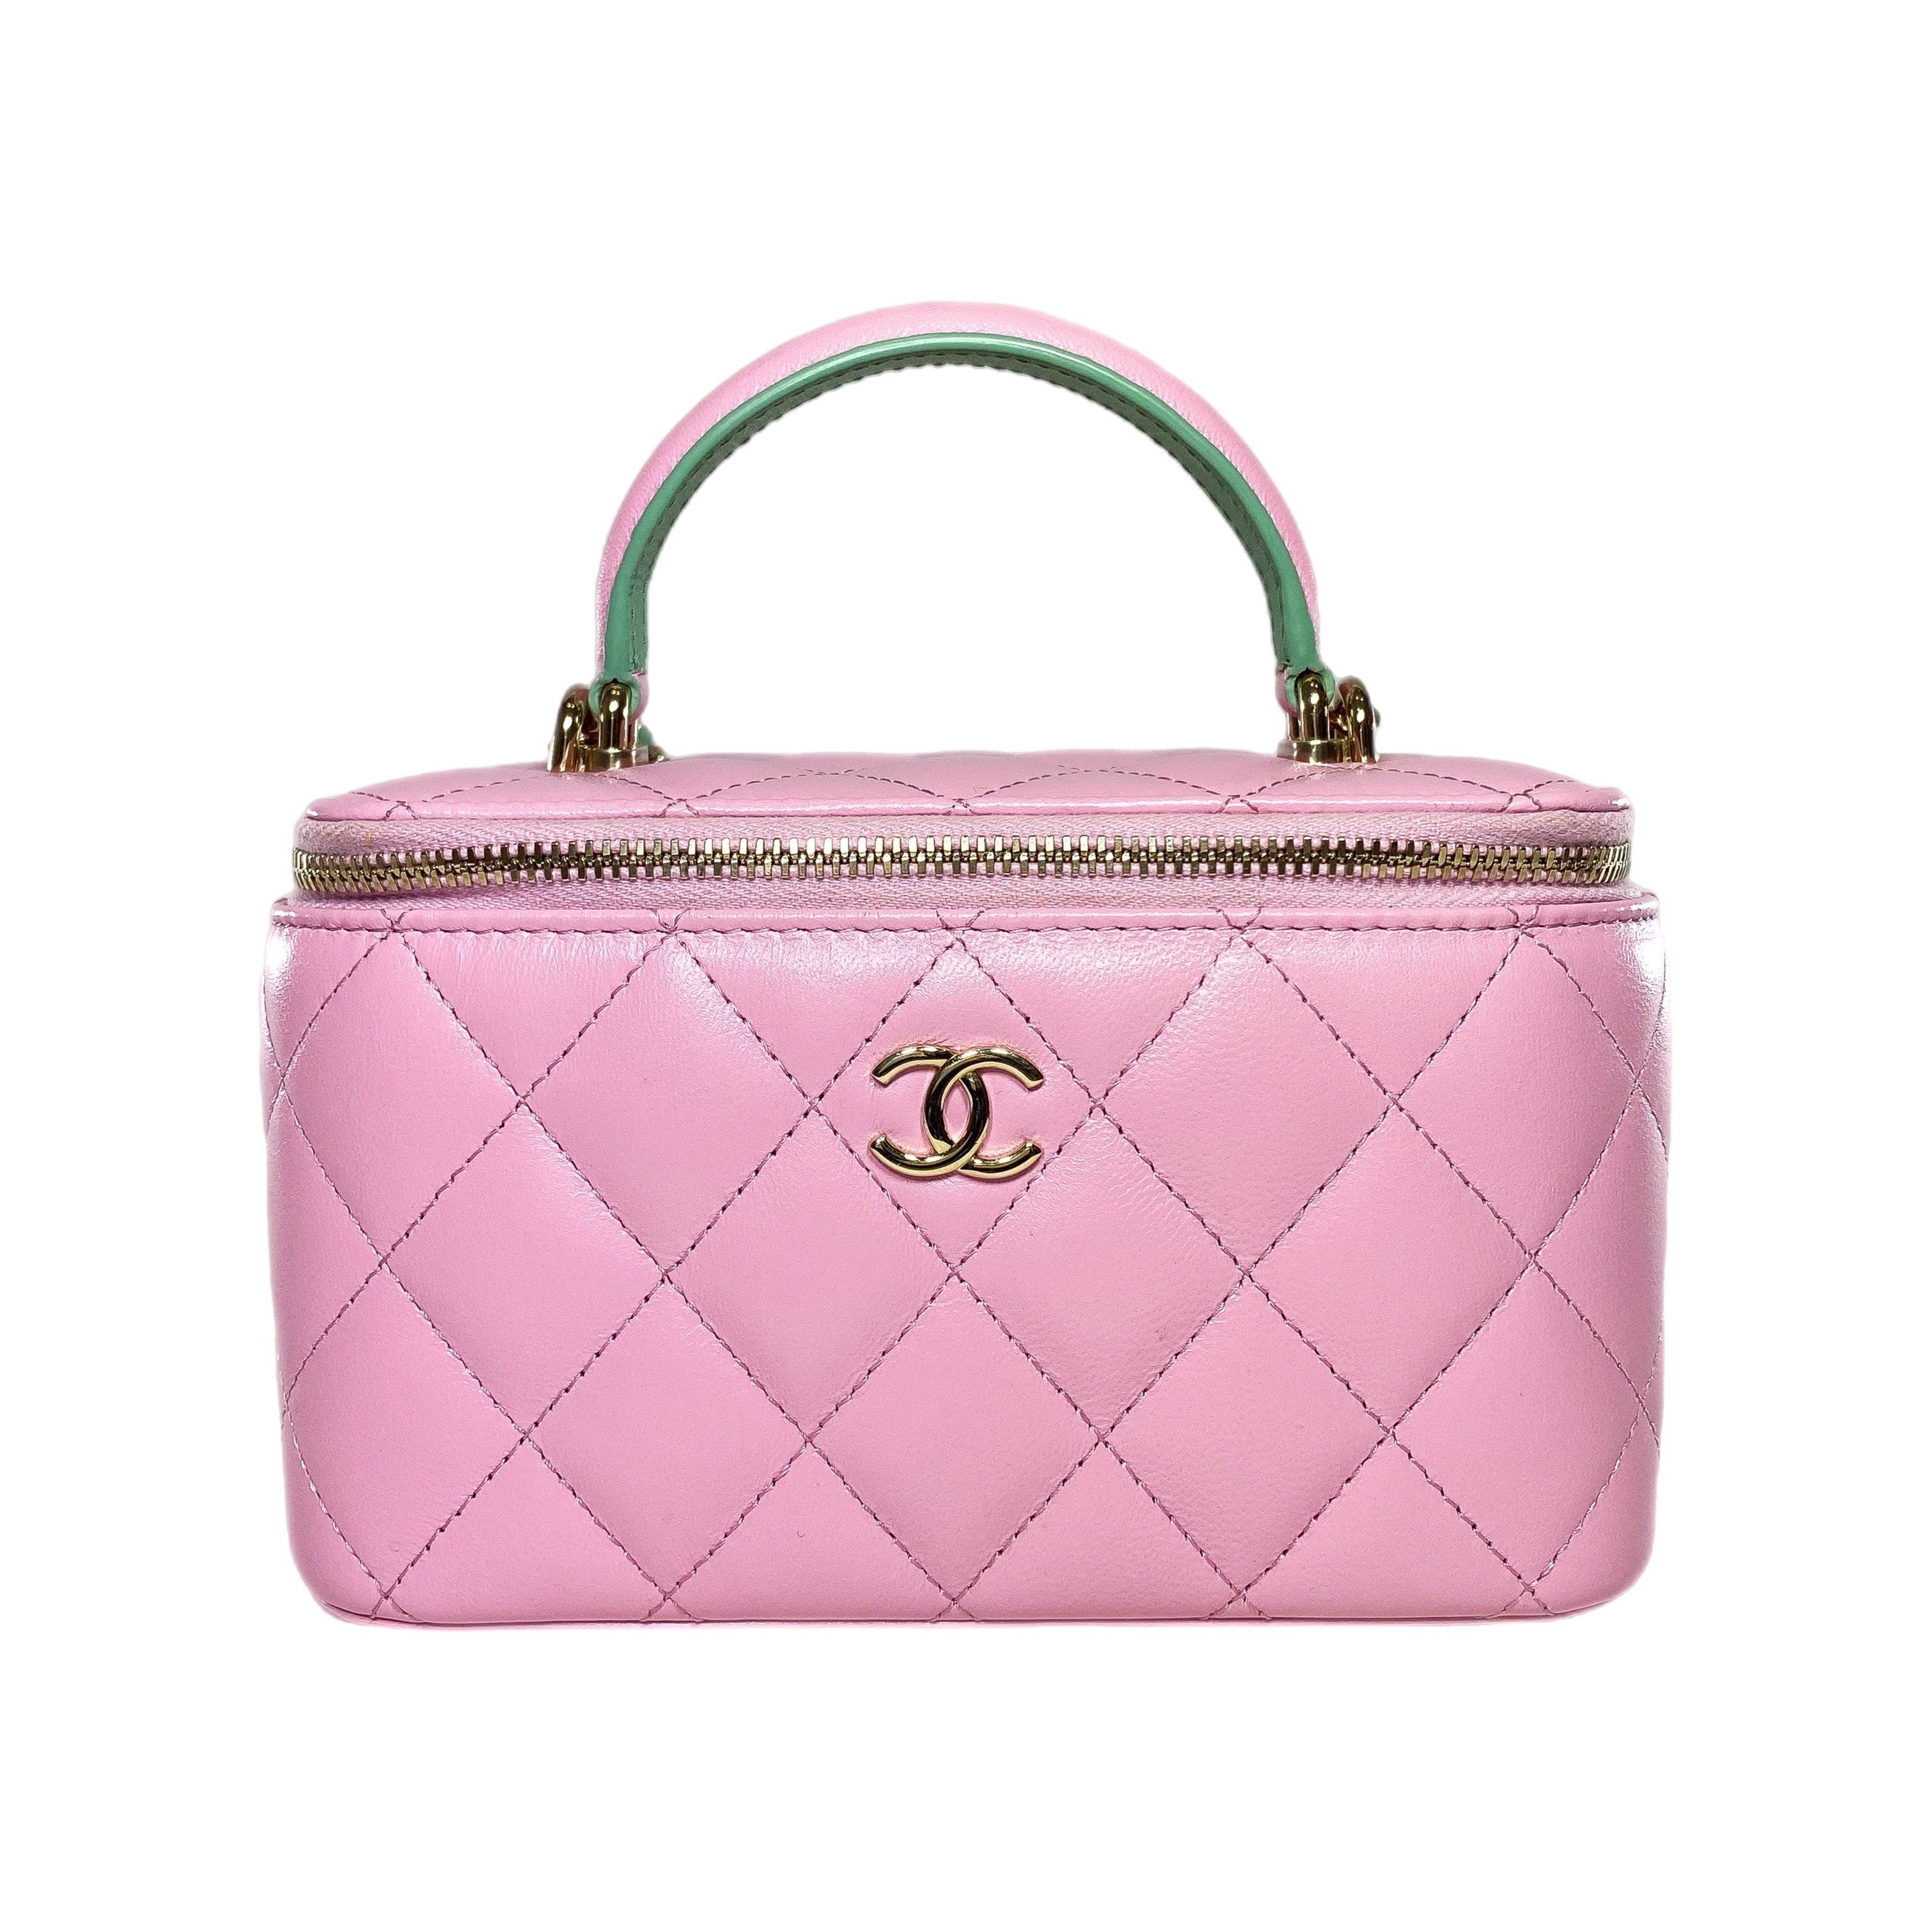 Chanel Pink Mint Green Vanity Case